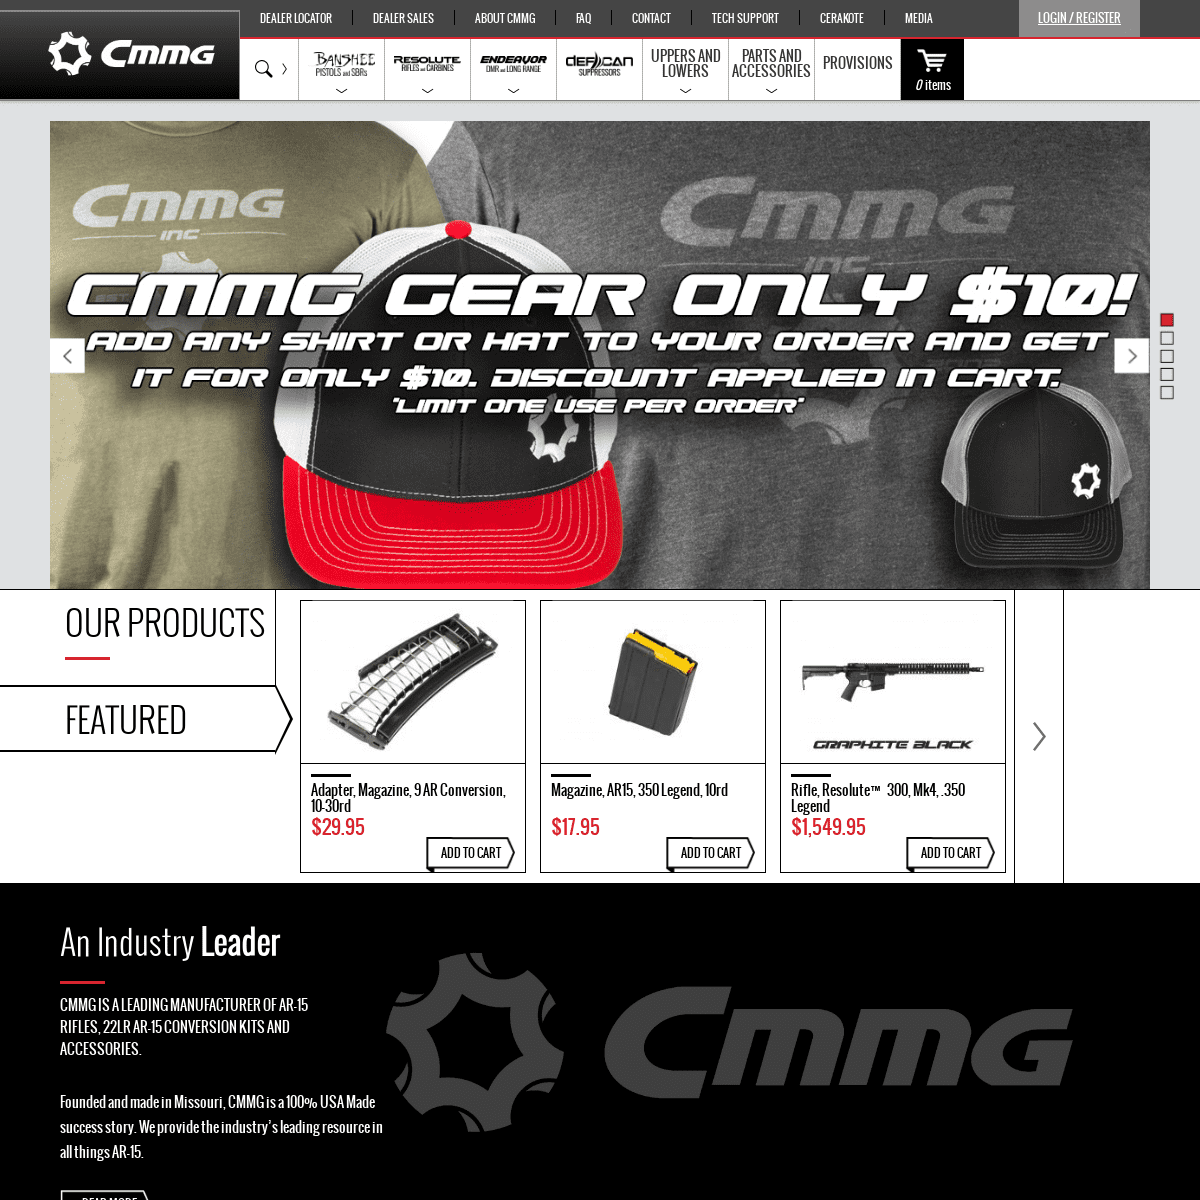 A complete backup of cmmginc.com